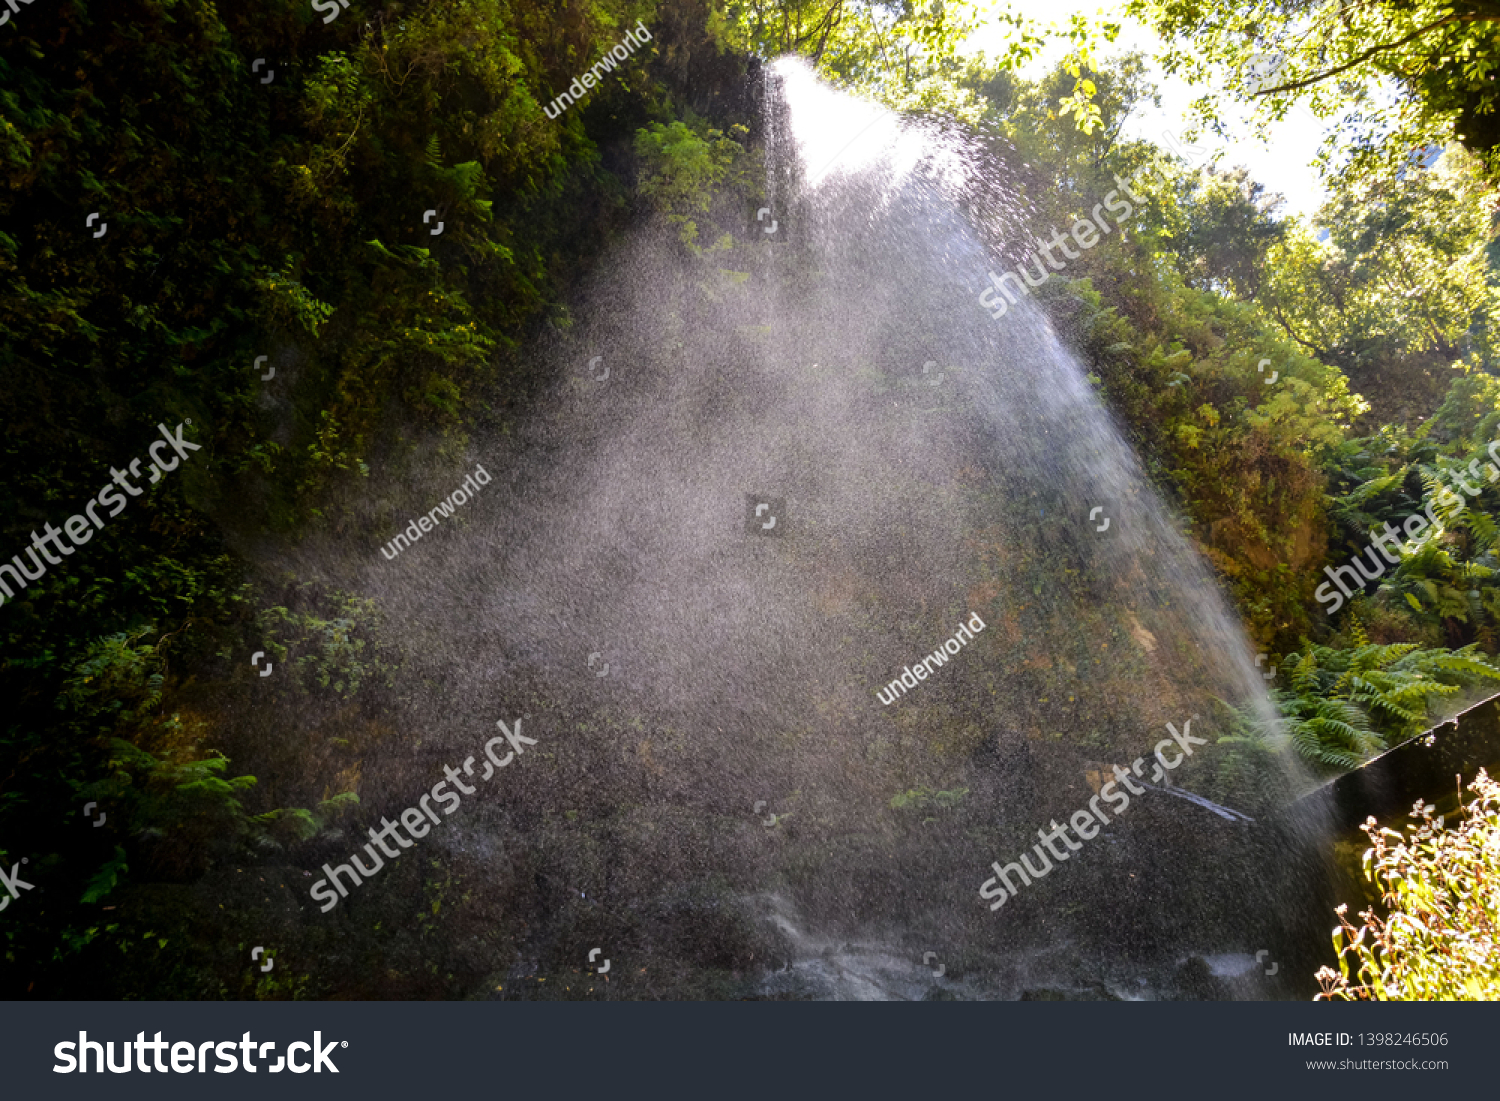 Photo Picture of a Beautiful Water Splash Waterfall #1398246506